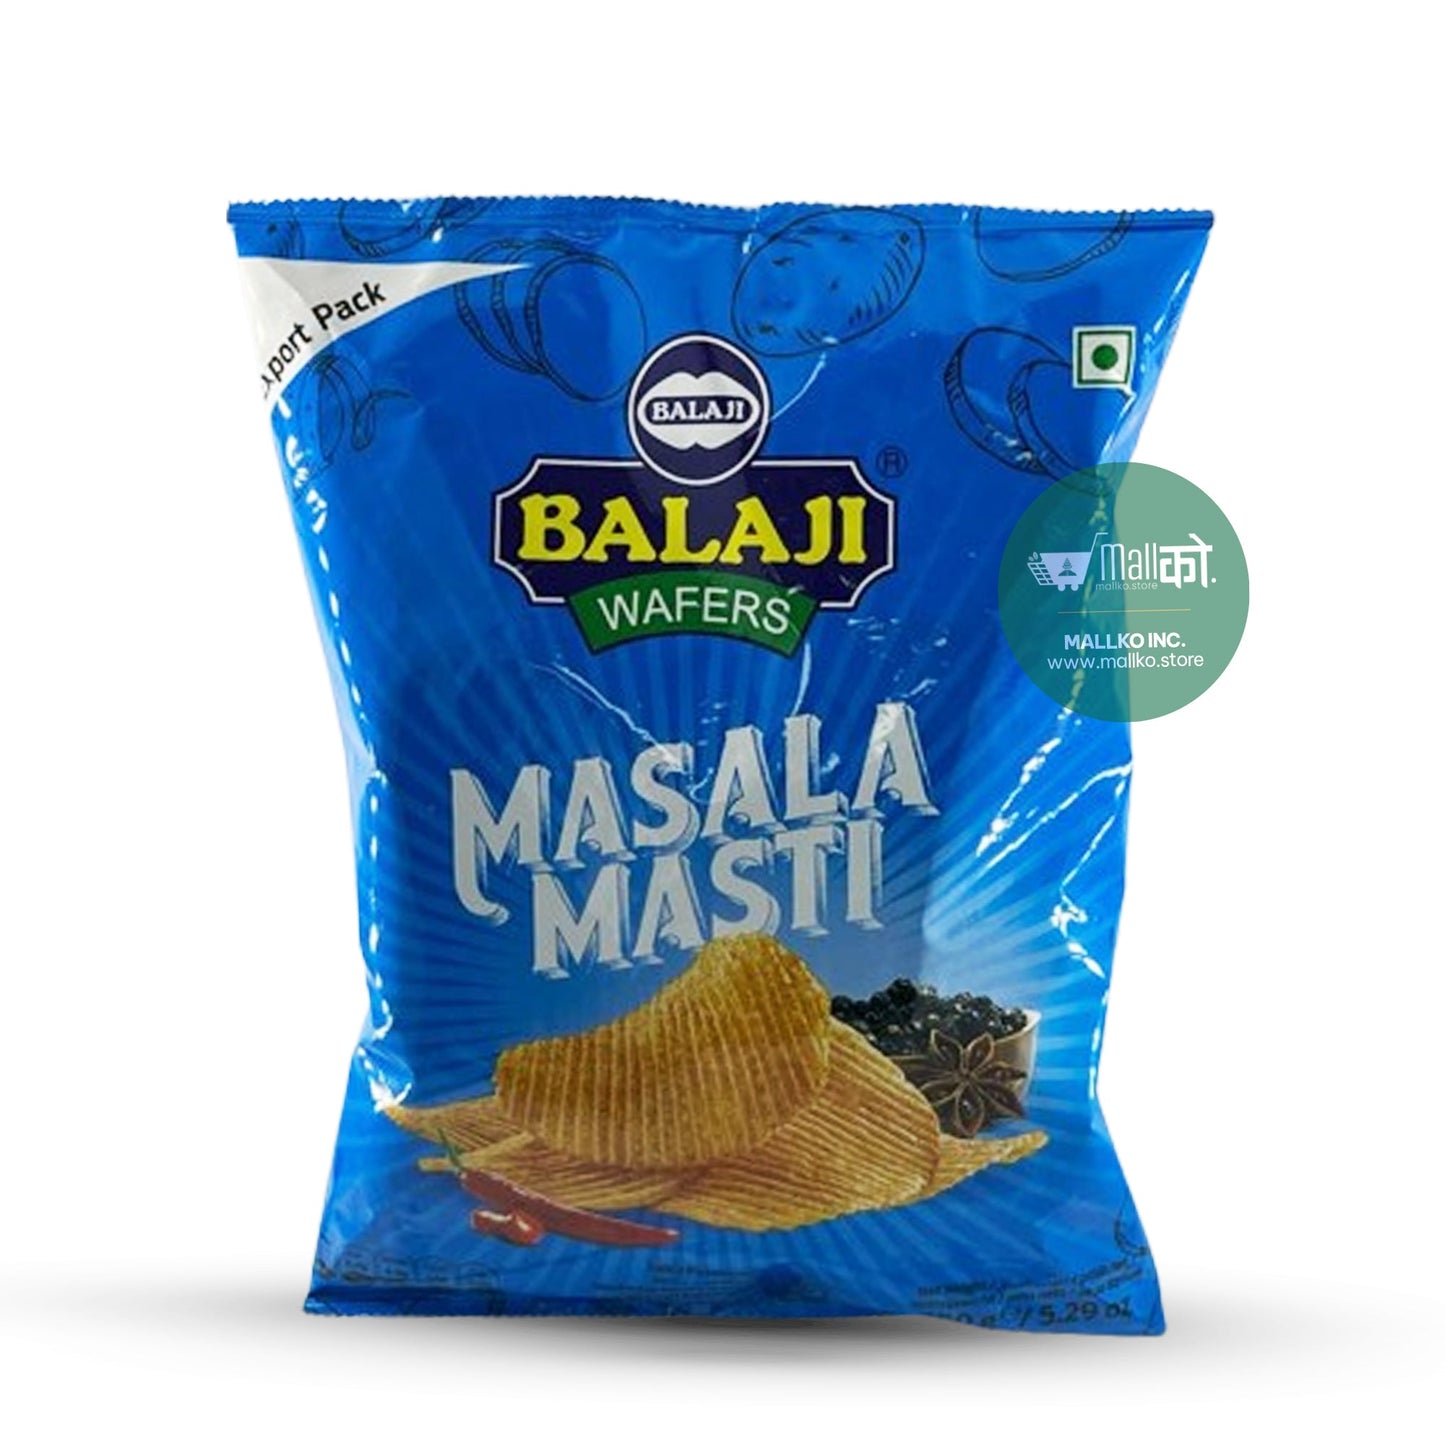 Masala Masti - Balaji Wafers